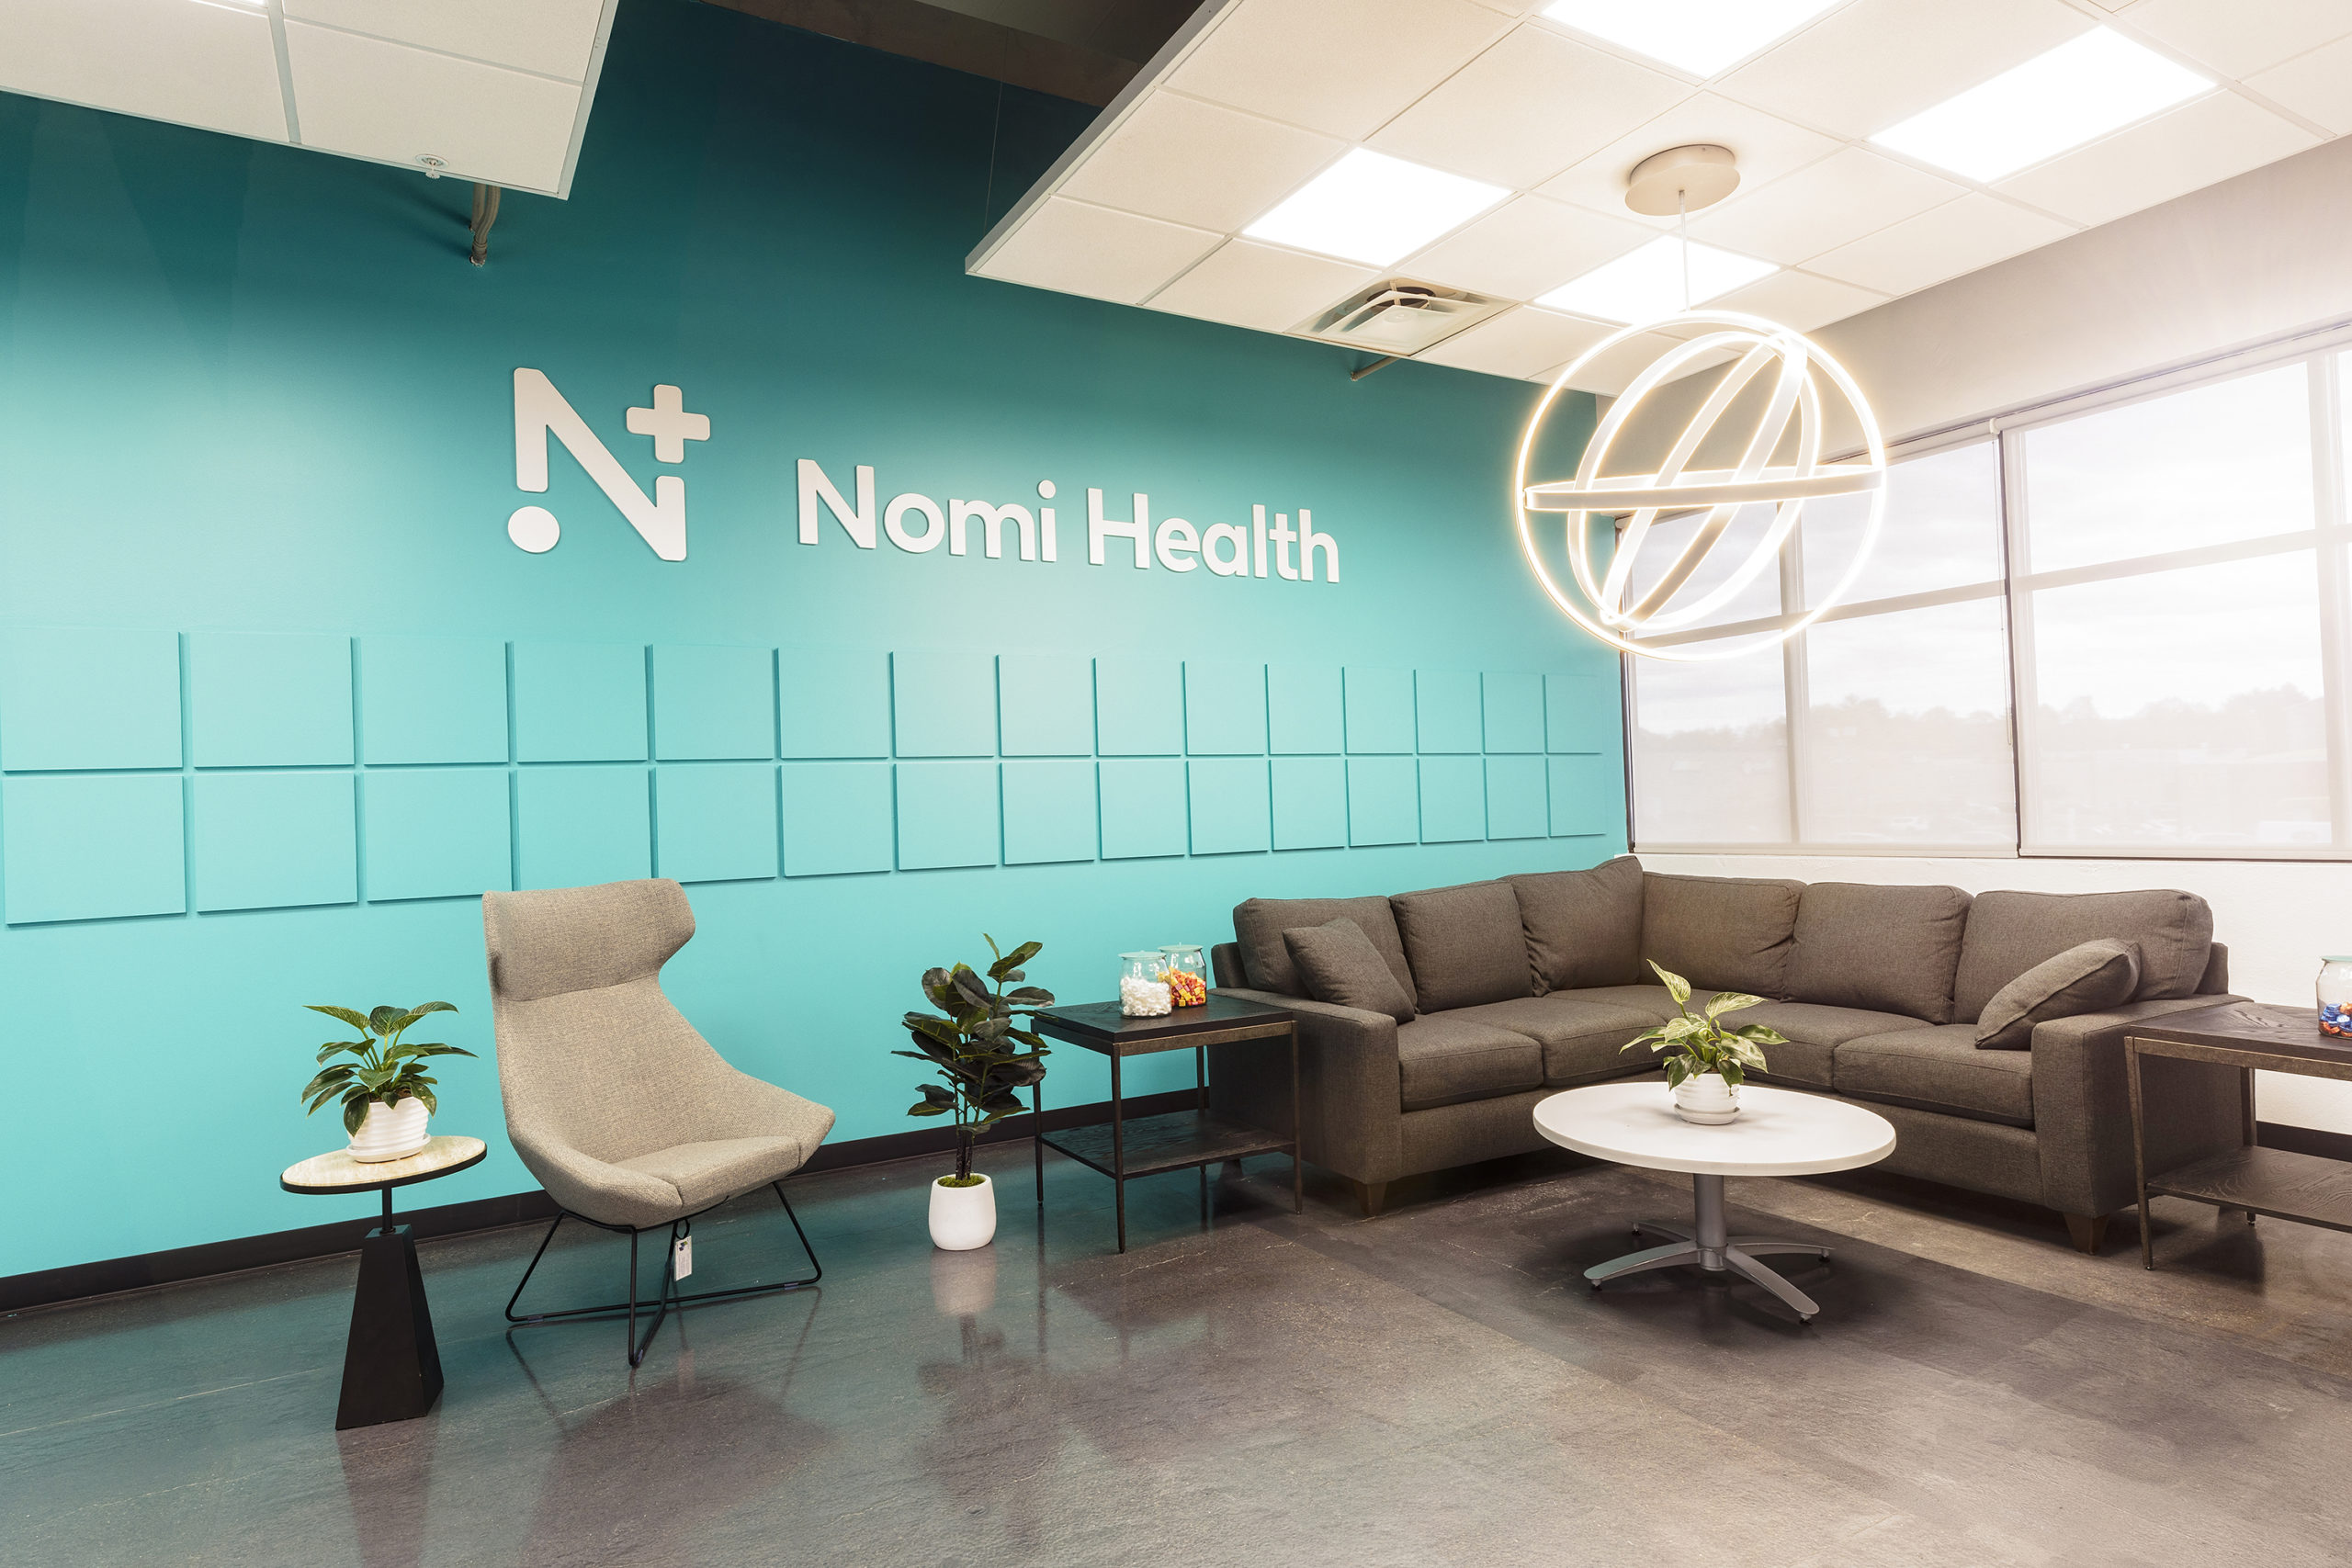 Nomi Health: Transforming Healthcare Access and Delivery